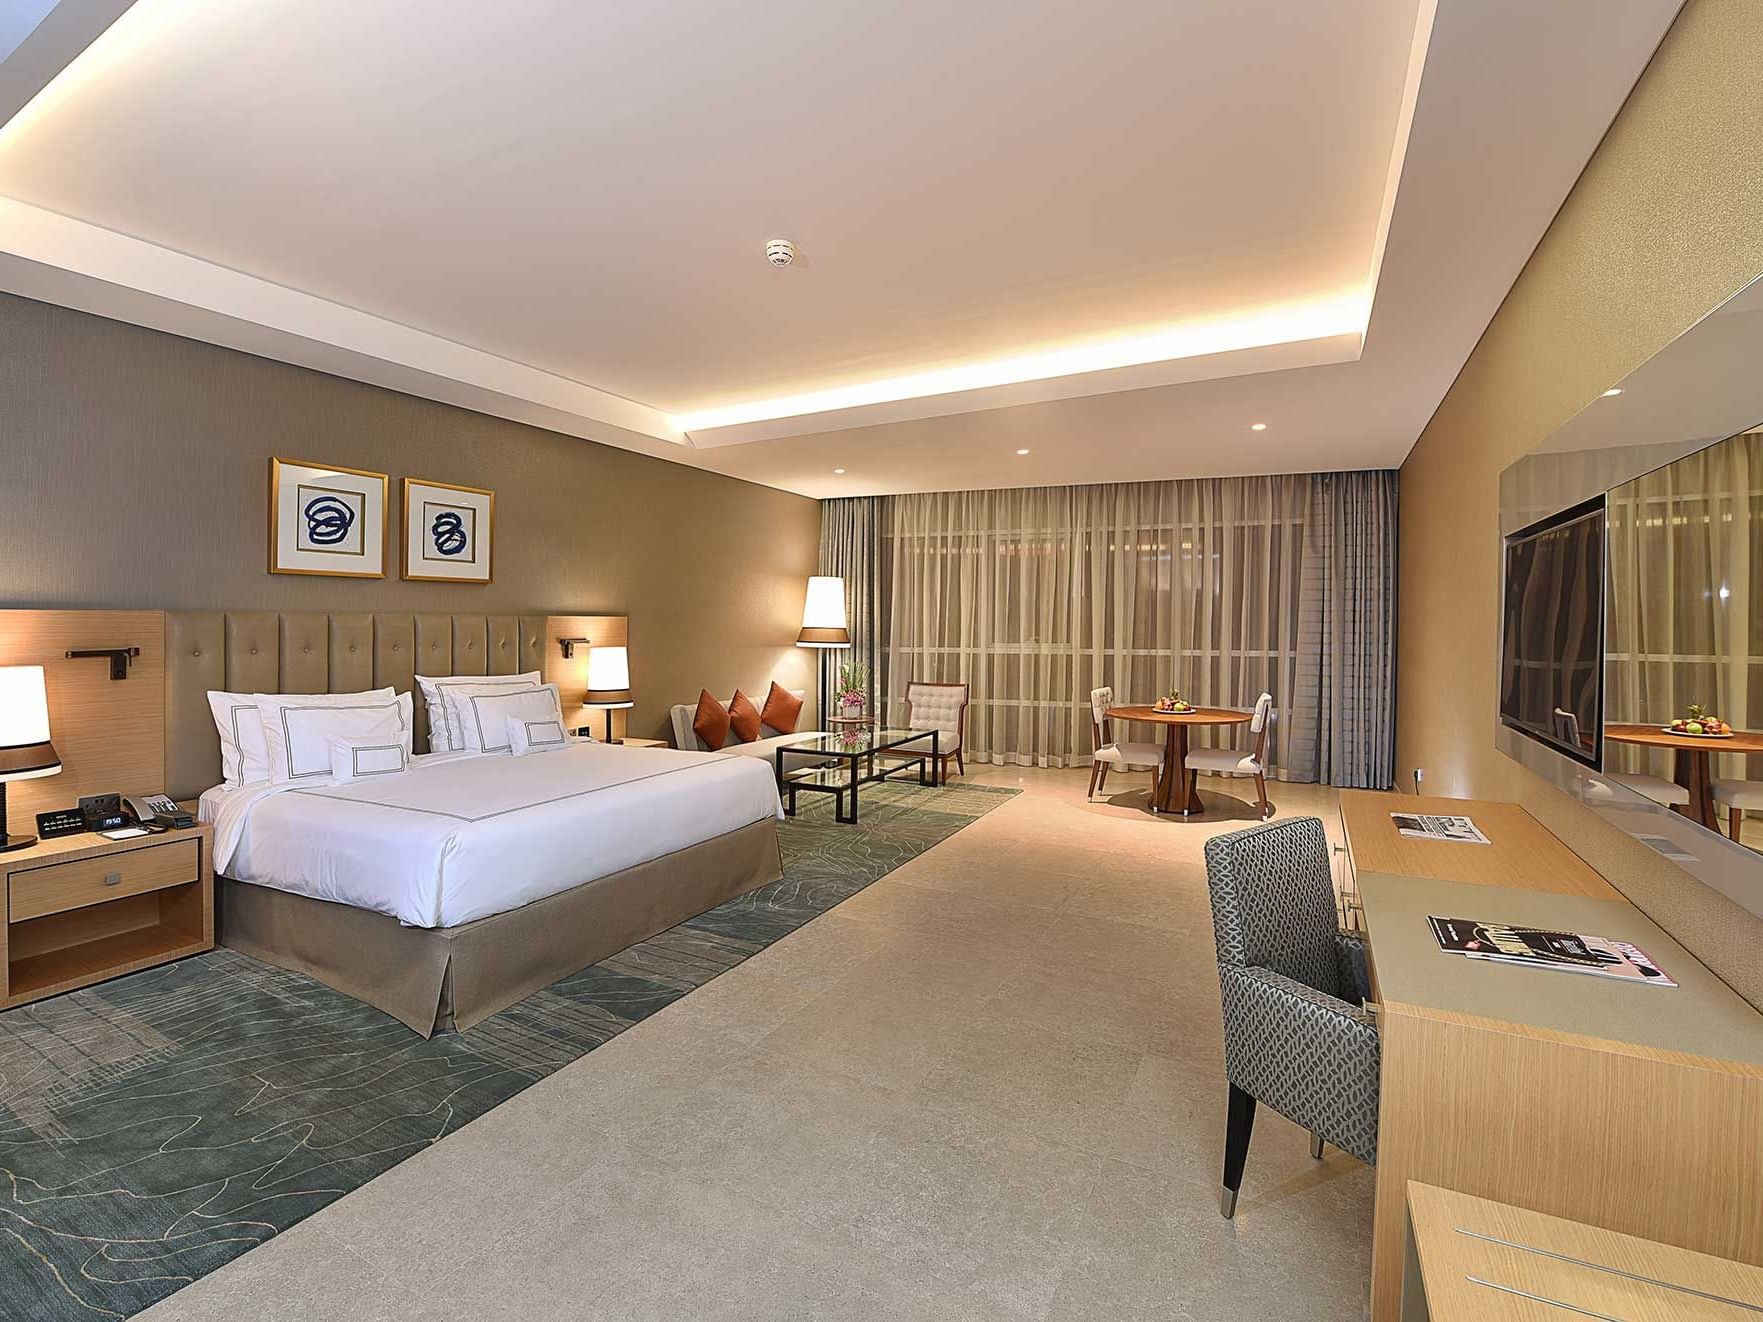 Executive Suite at Grand Cosmopolitan Hotel in Dubai